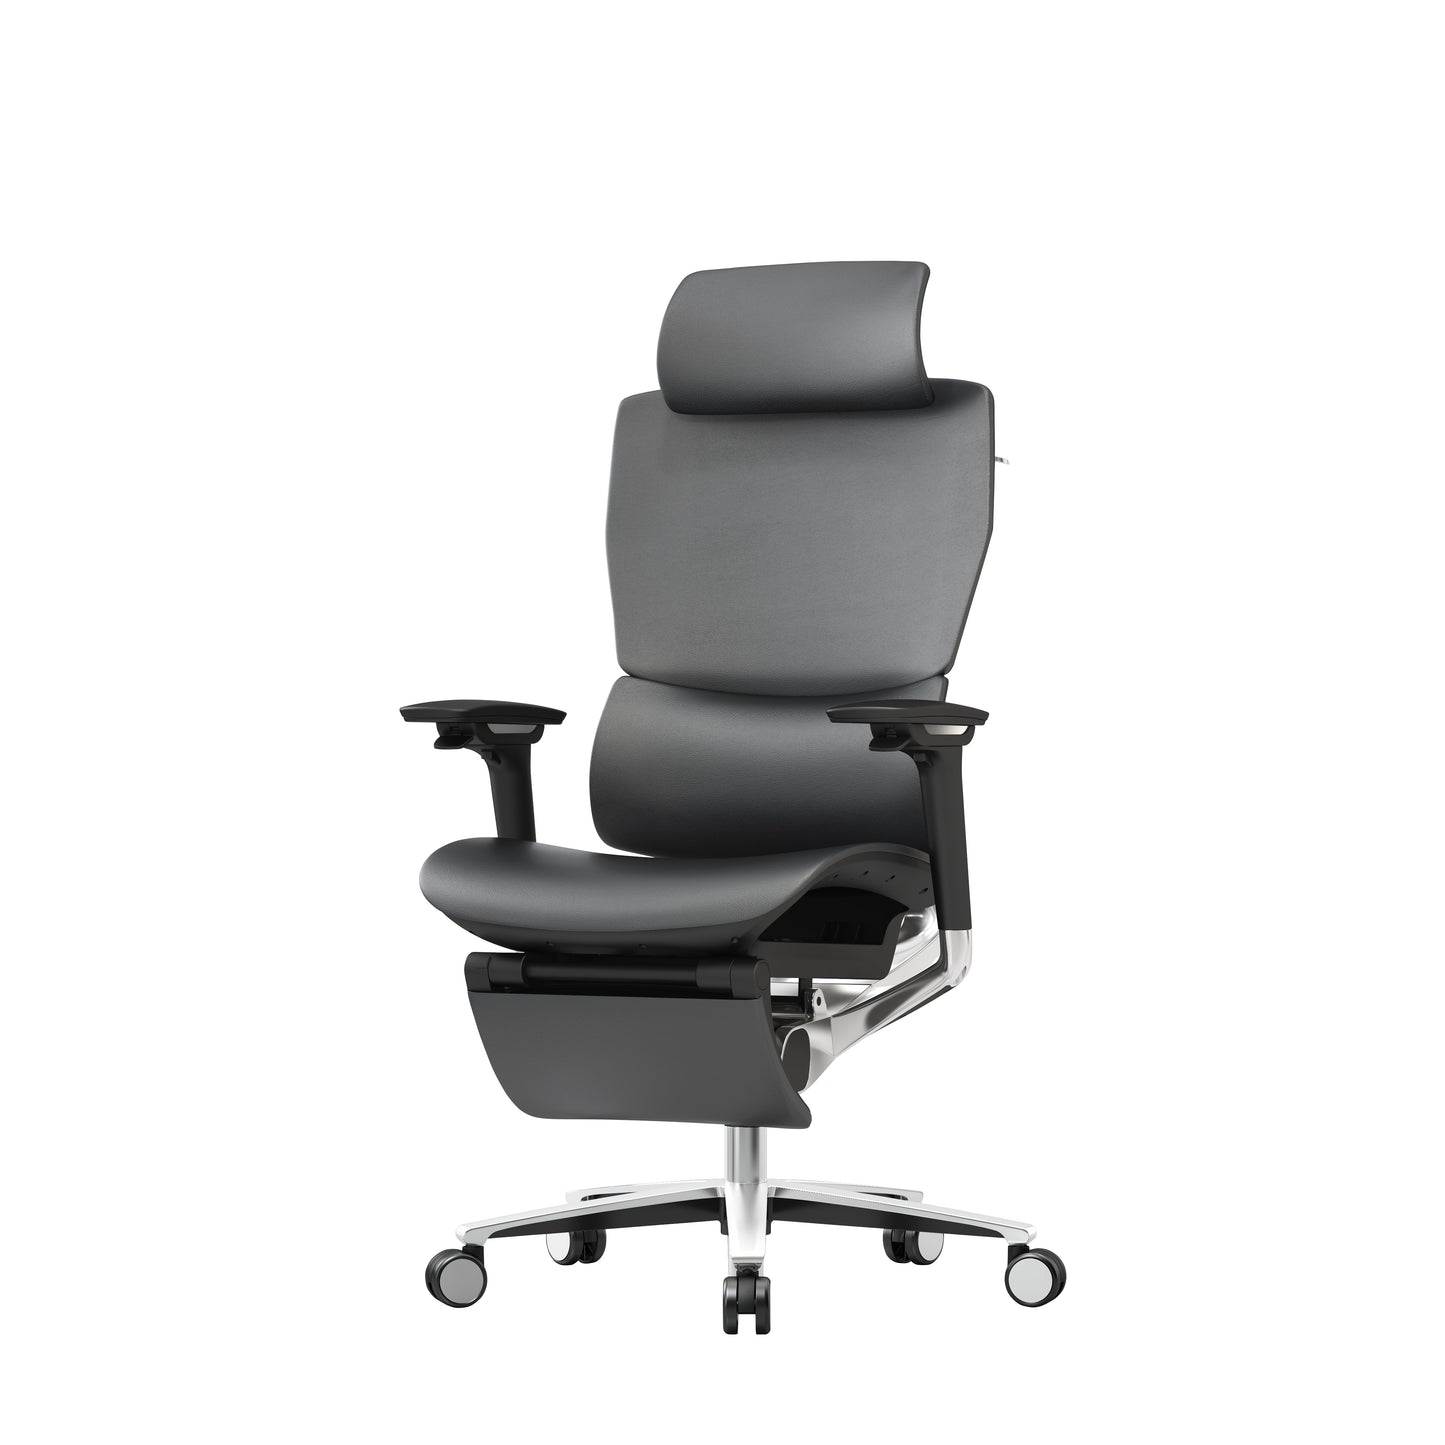 EKO-SJA159 - With Headrest Leather Office chair